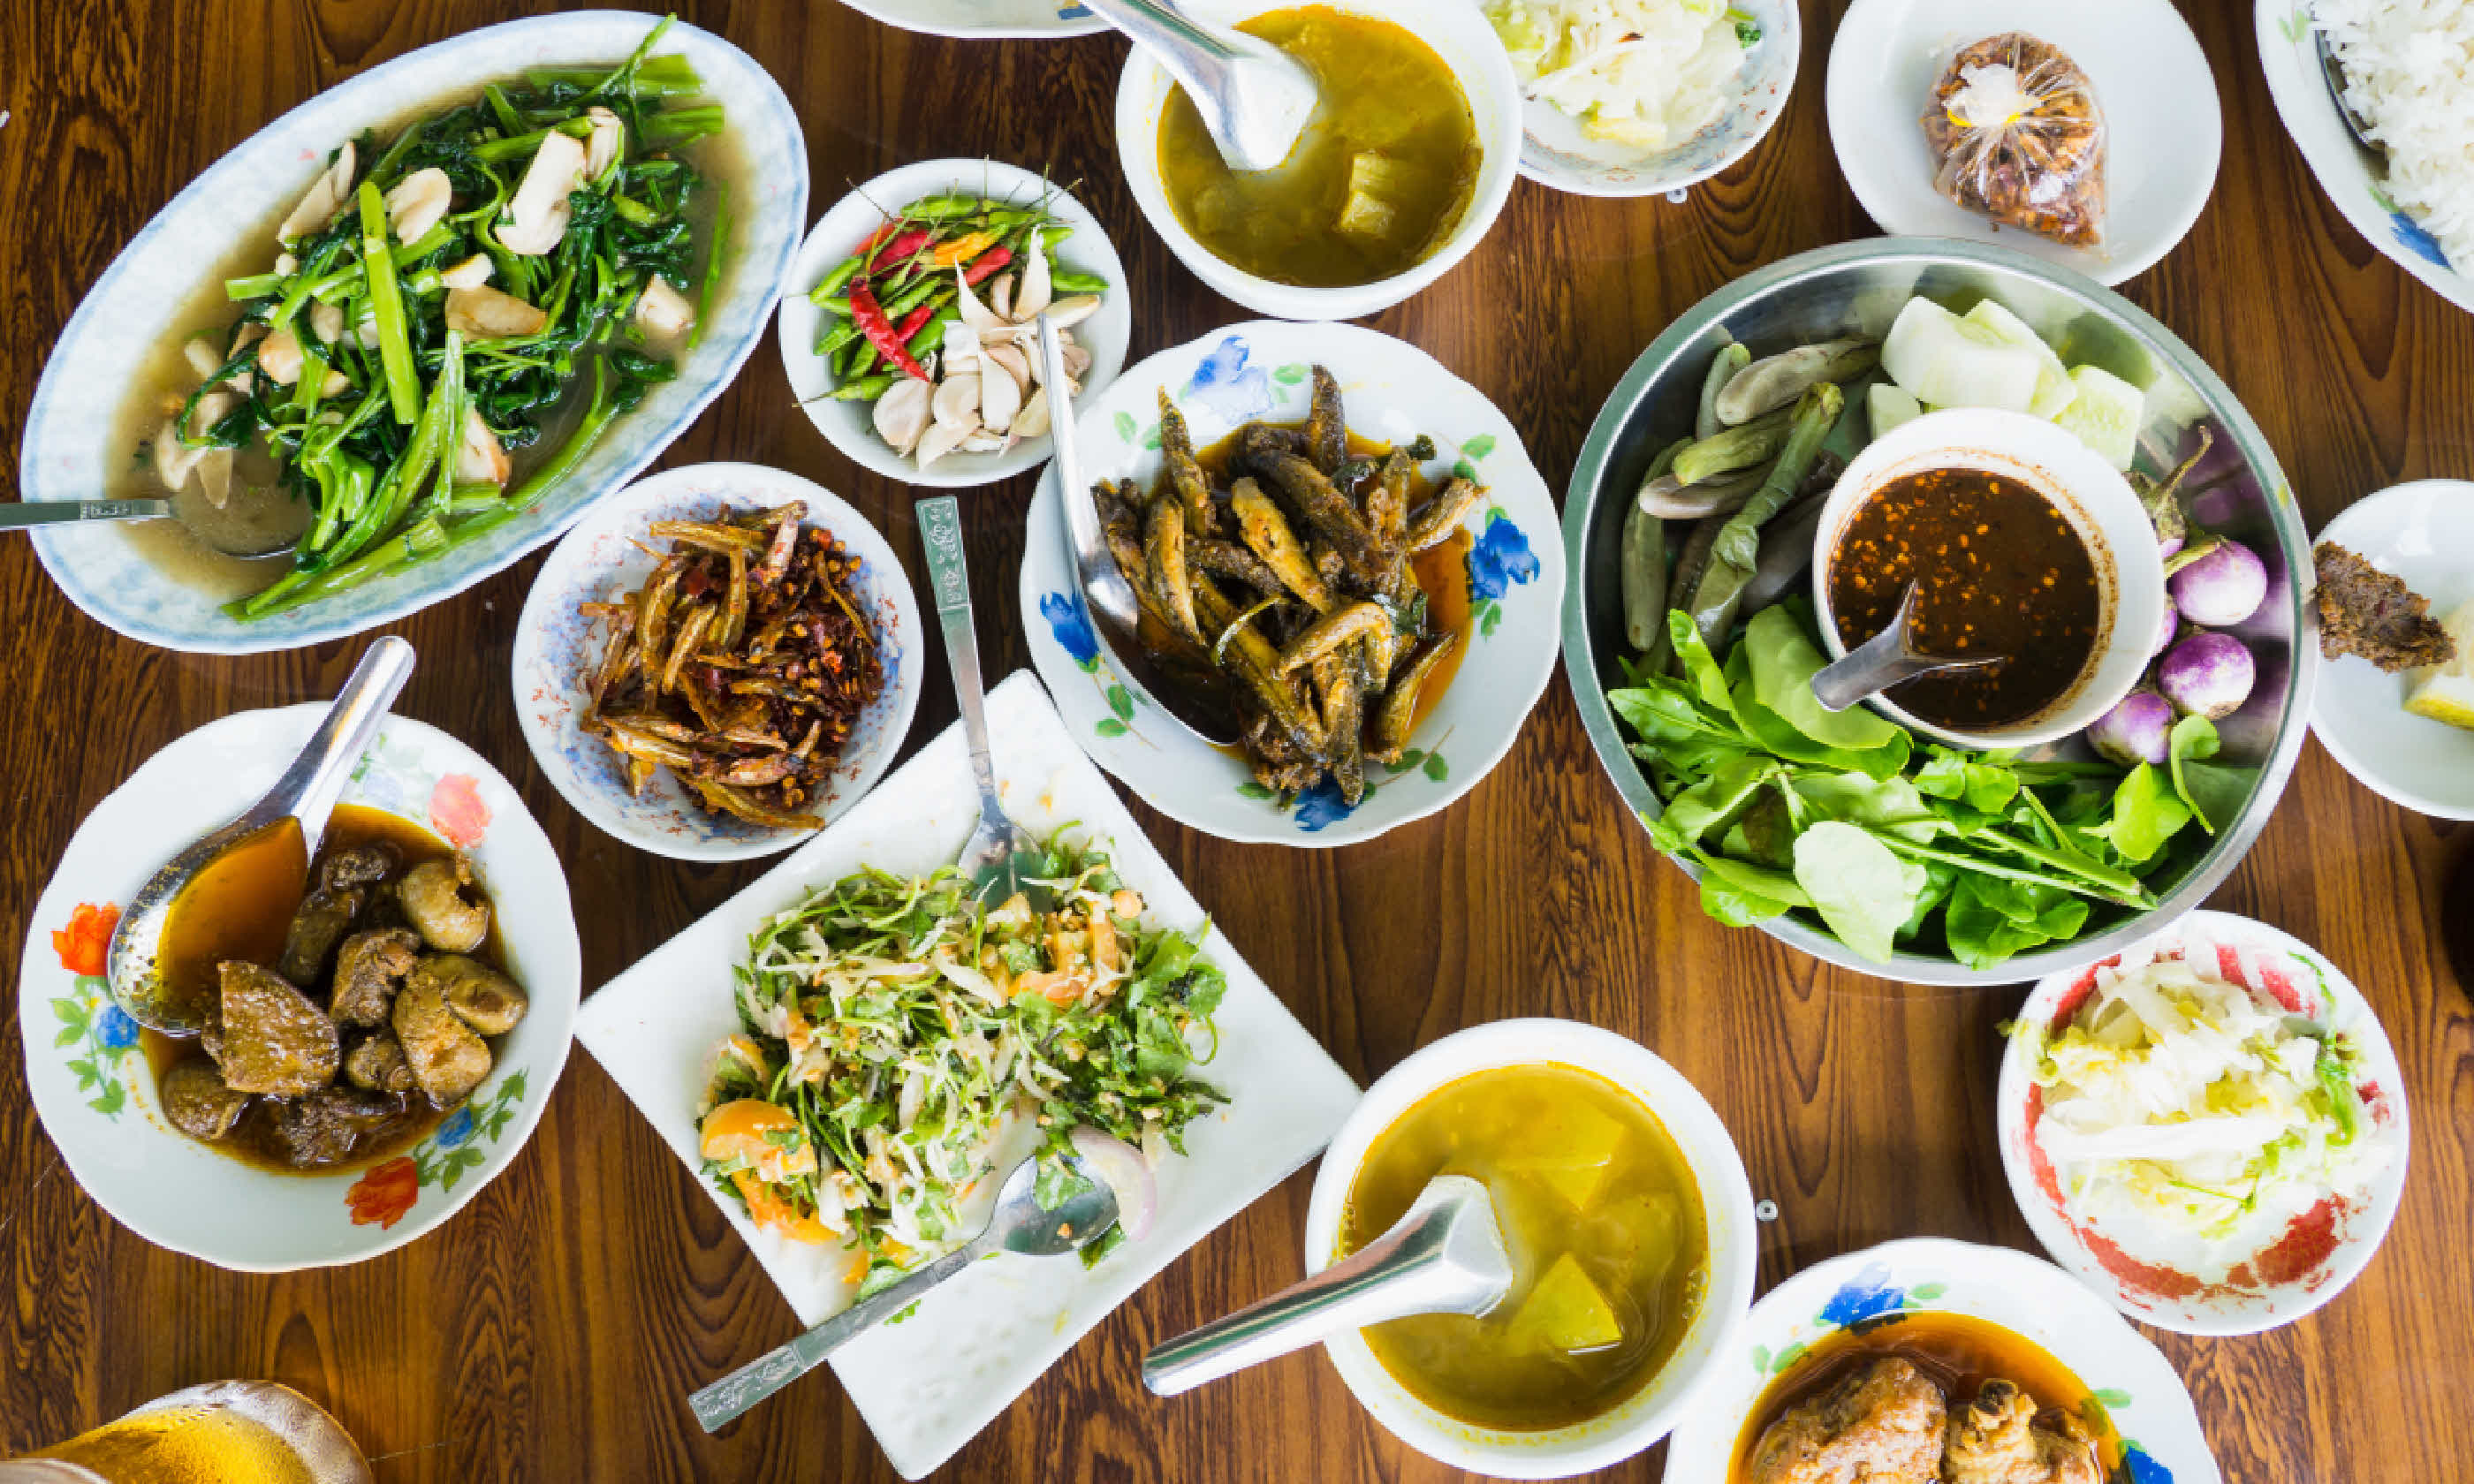 Restaurant table in Burma (Shutterstock)